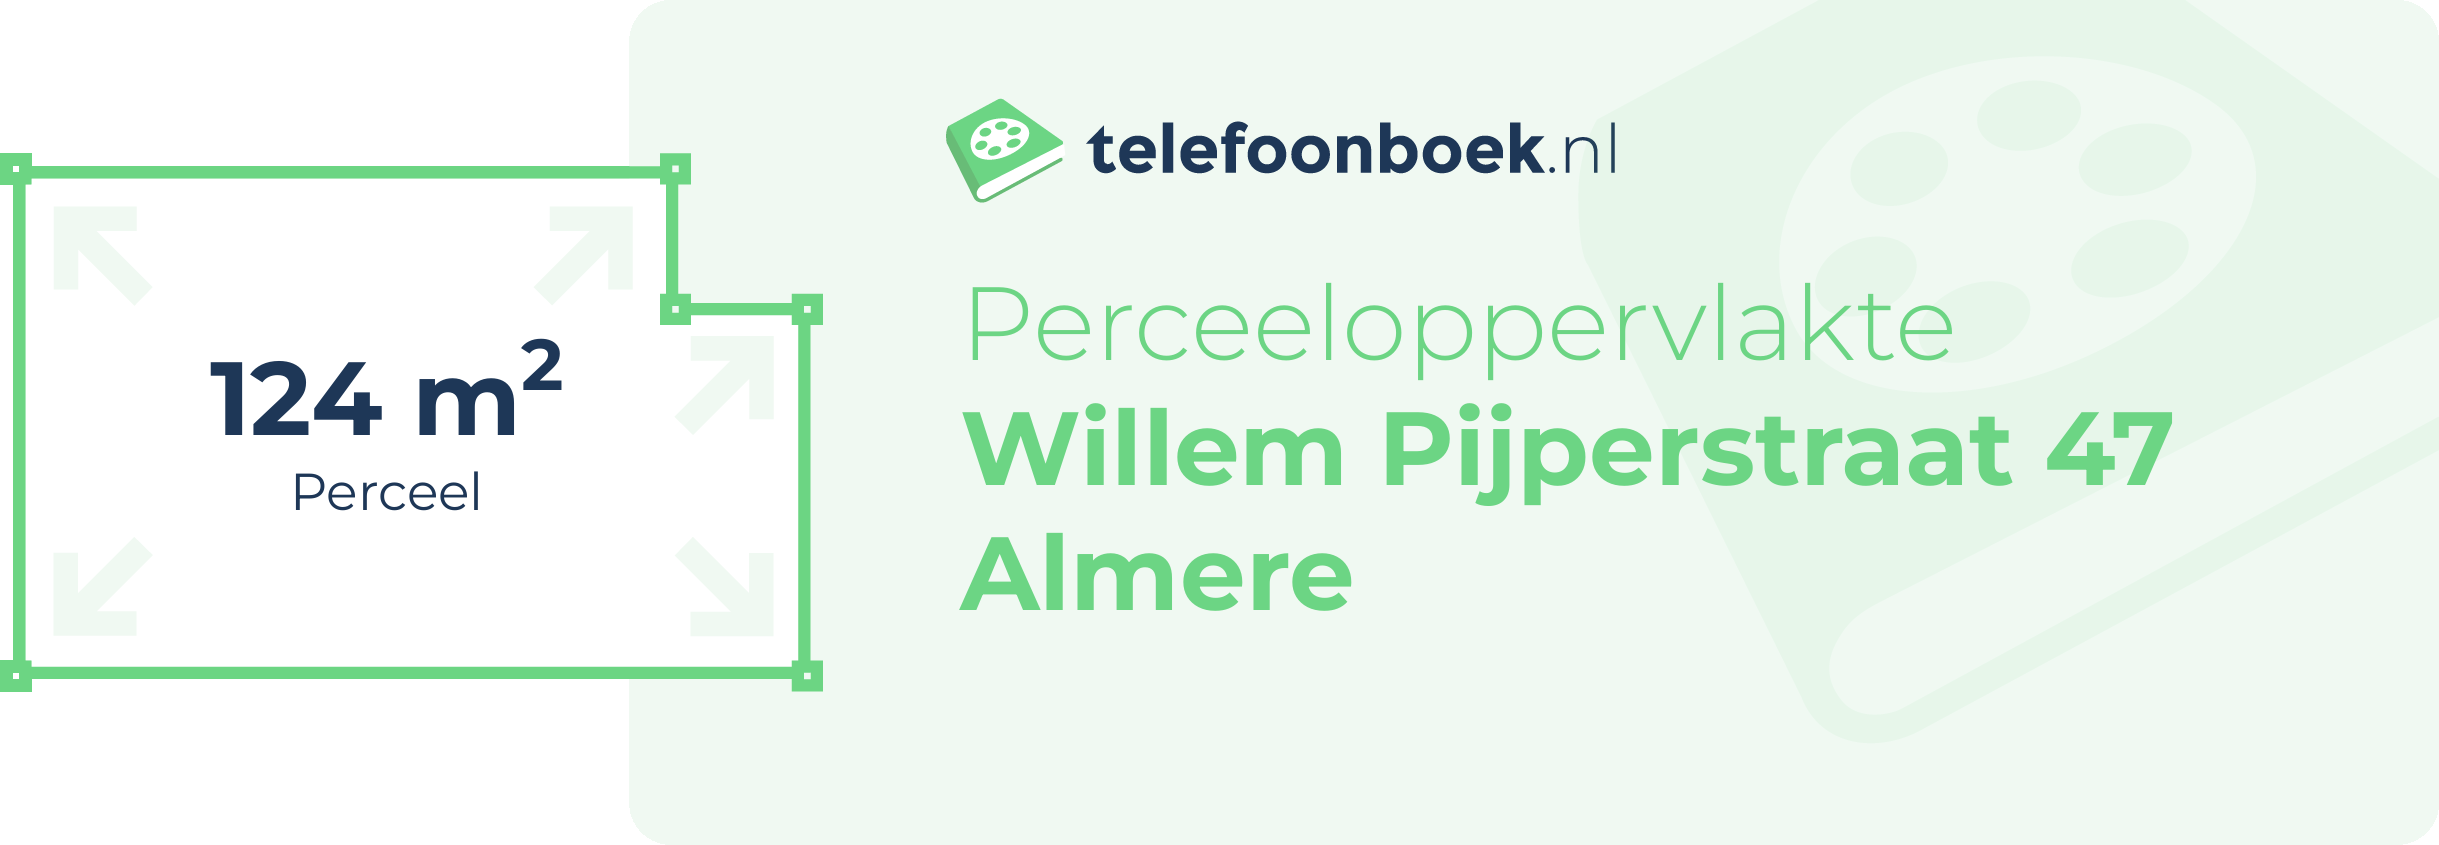 Perceeloppervlakte Willem Pijperstraat 47 Almere